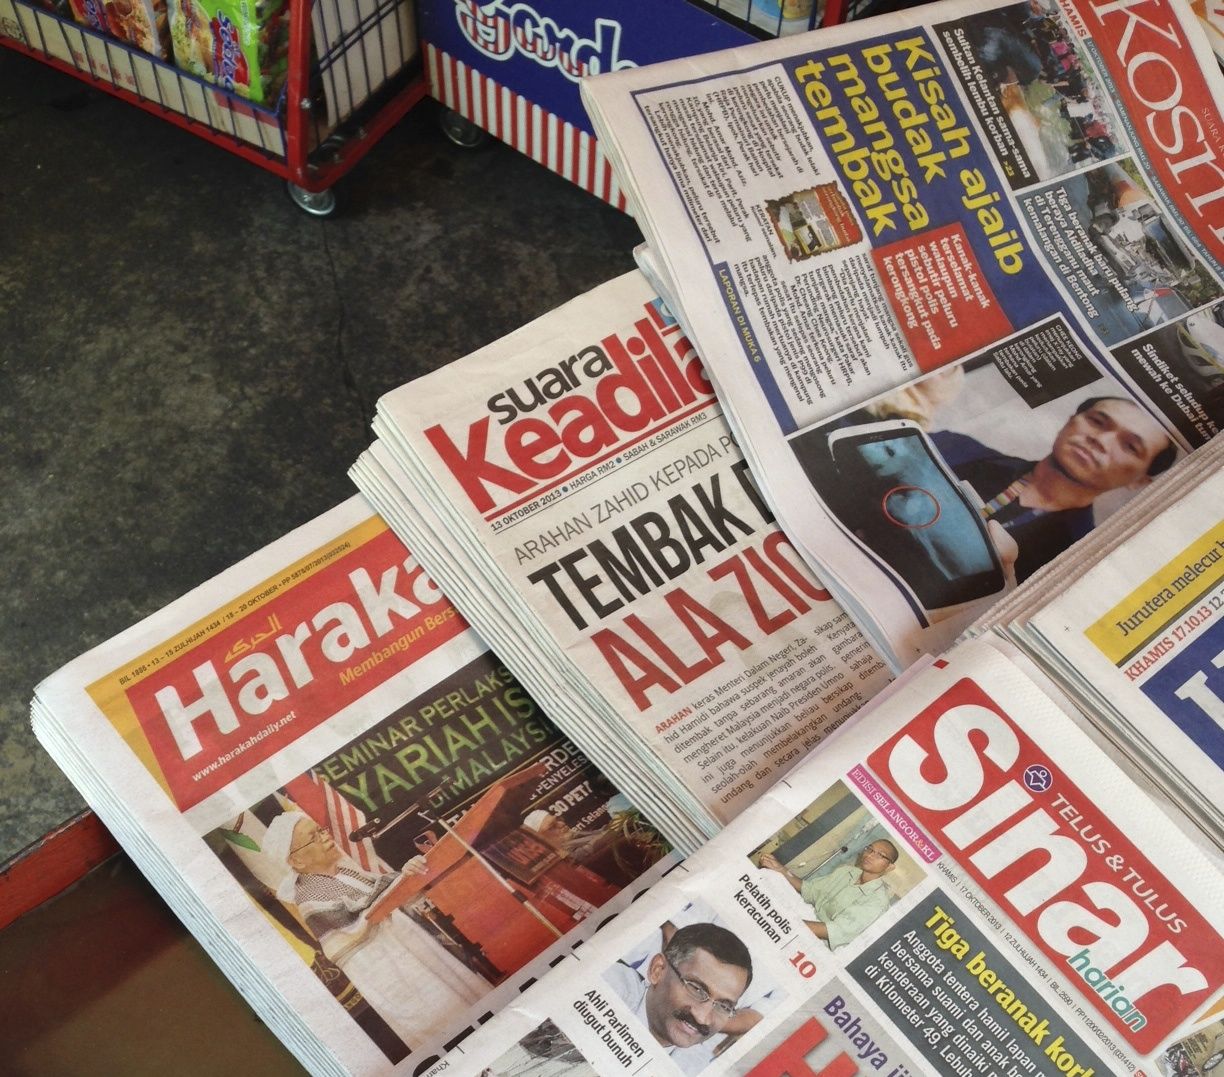 Is Malaysia’s press still suppressed? – Kata Malaysia